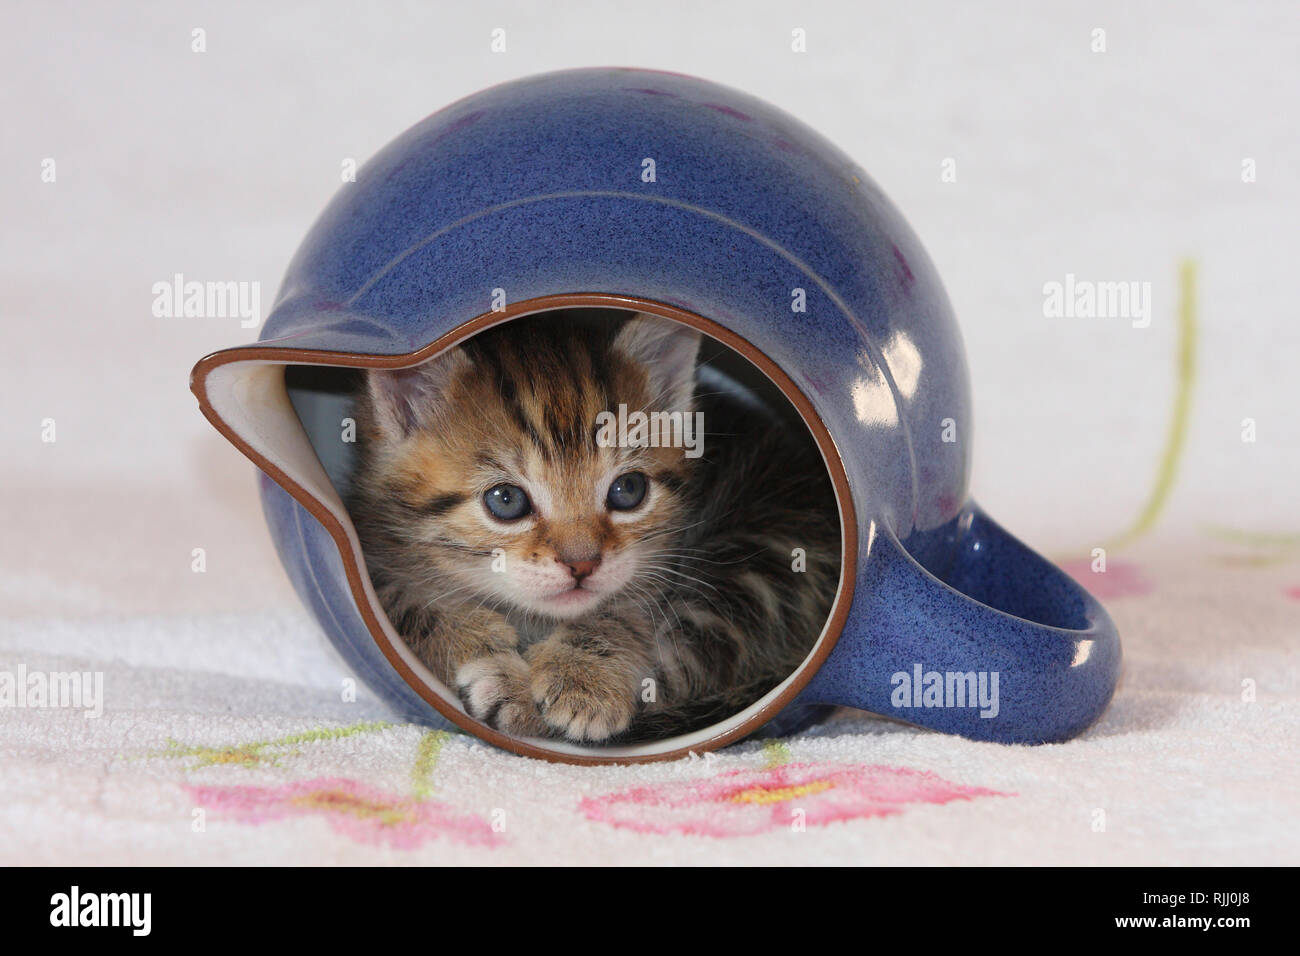 Domestic cat. Kitten in a jar. Germany Stock Photo